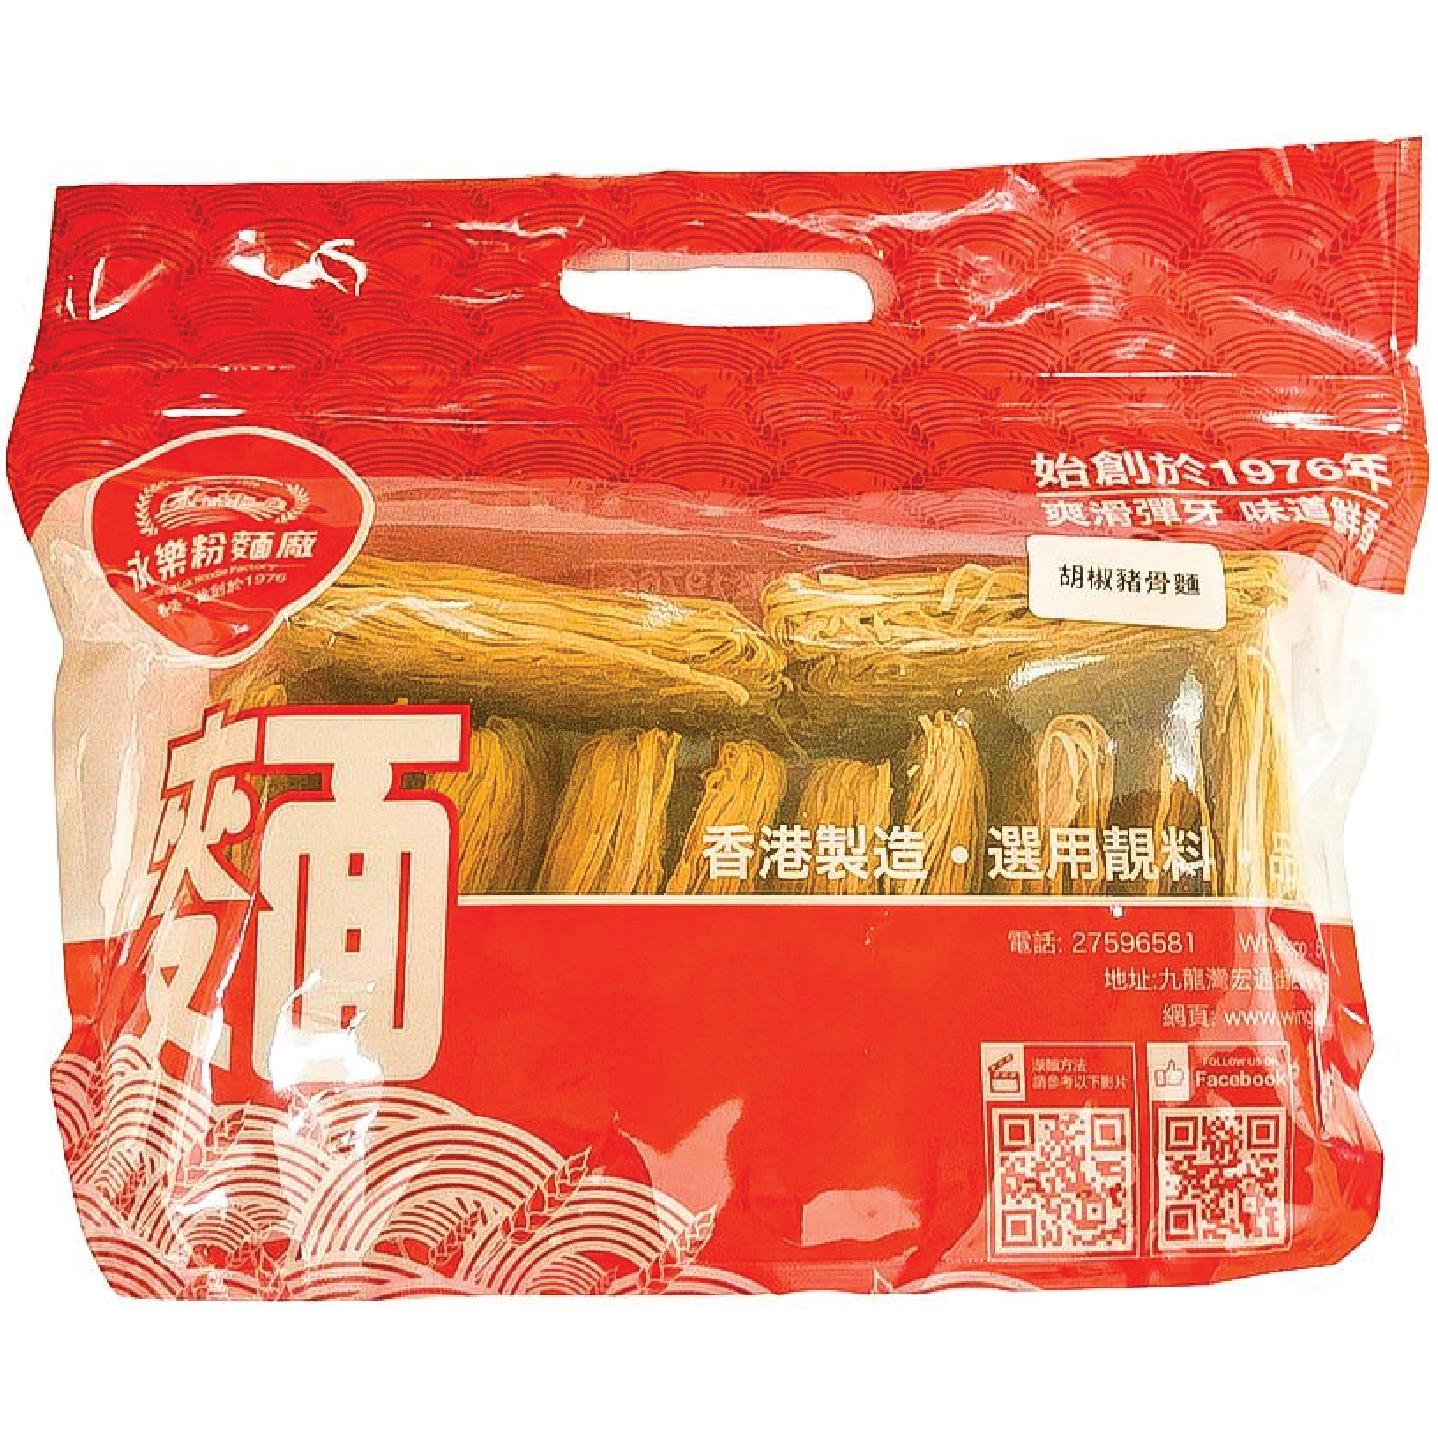 WING LOK Pepper Pork Noodle (12PCS) 永樂粉麵廠 胡椒豬骨麵 (12個裝)